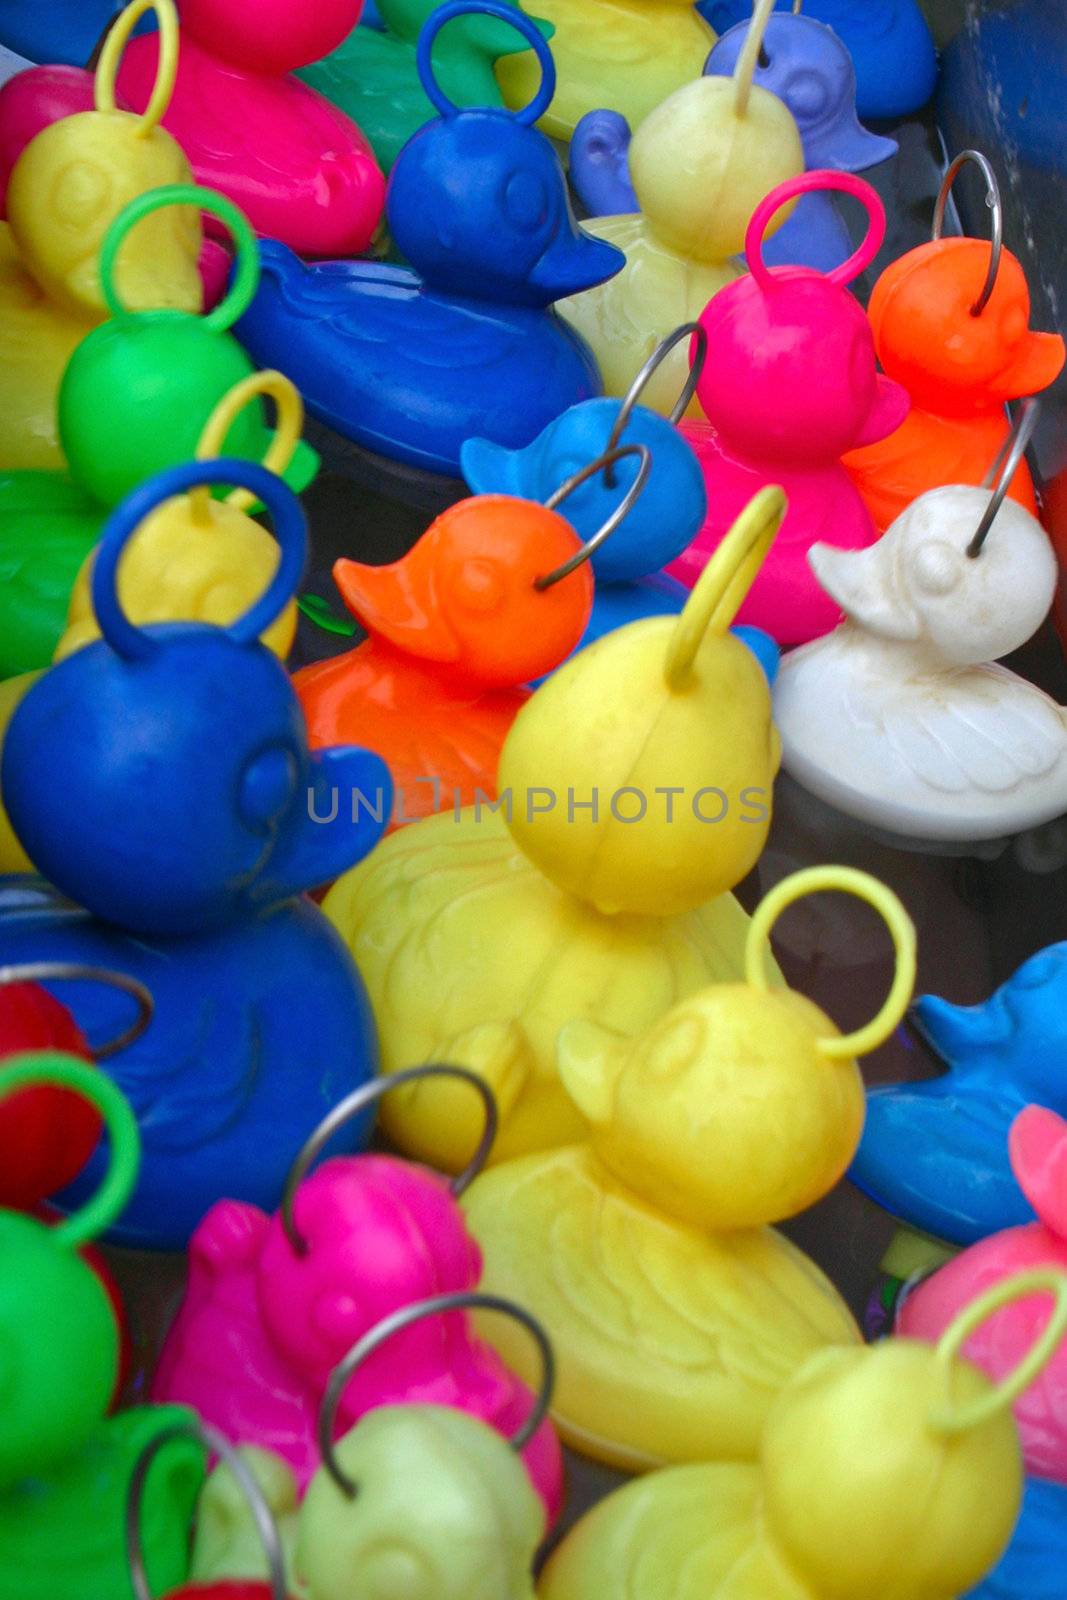 Fishing plastic ducks at the carnival fair